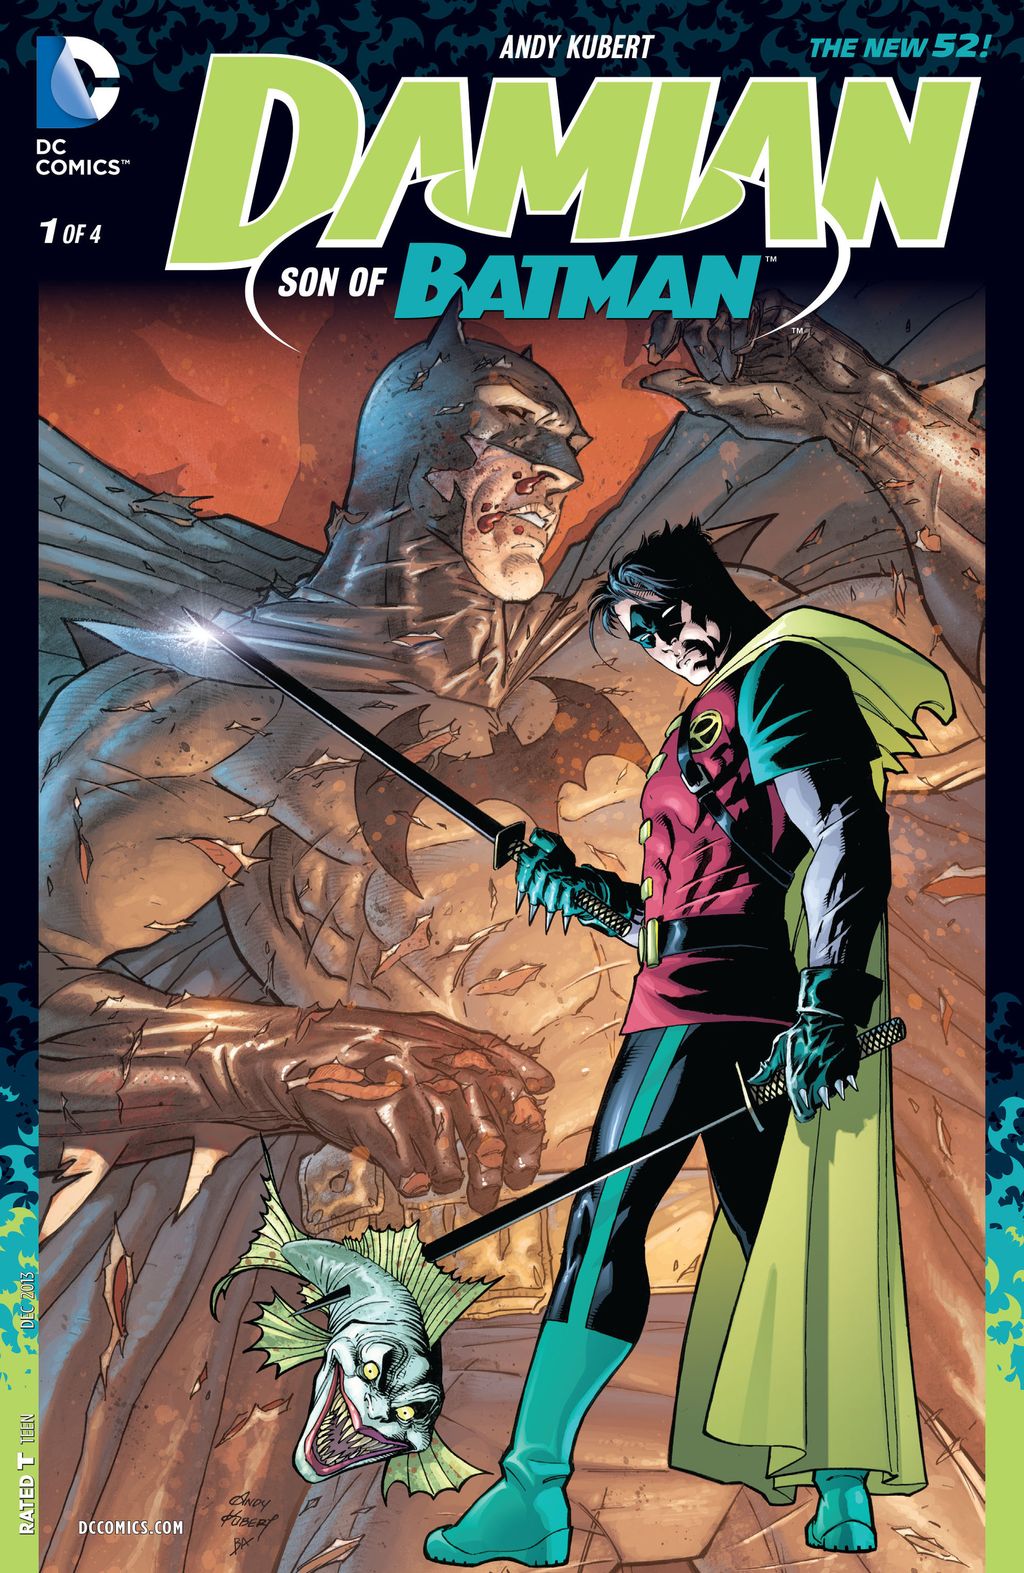 Damian: Son of Batman #1 by Andy Kubert (Comics Review) | Shadowhawk's Shade